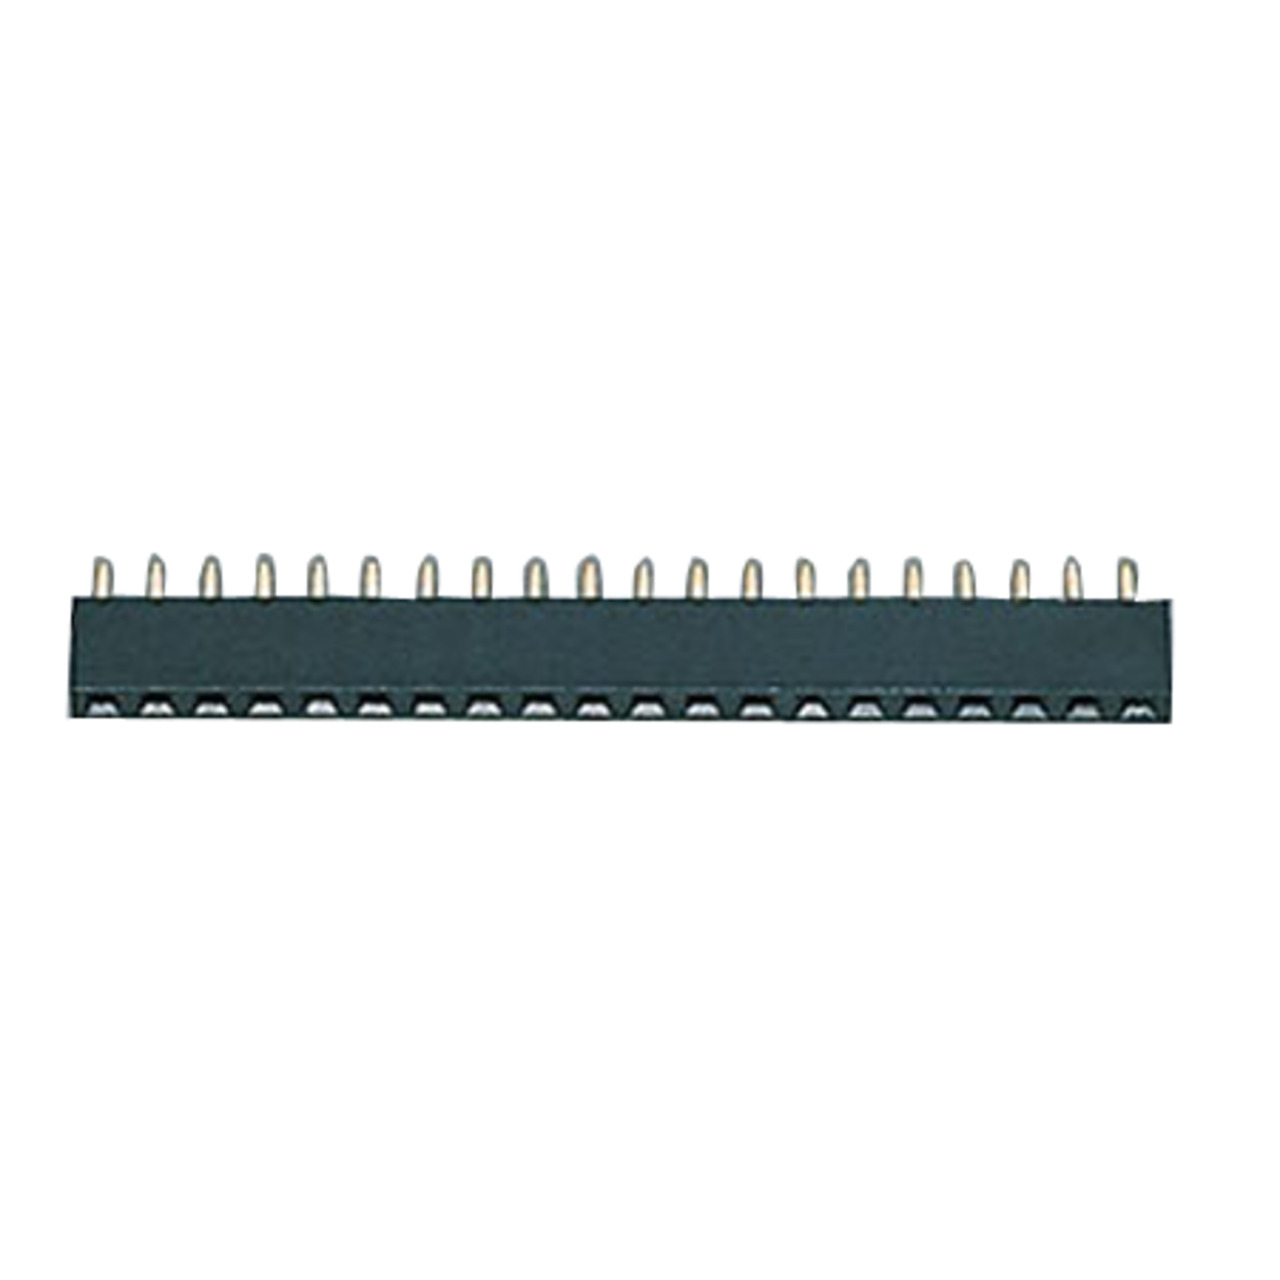 Buchsenleiste- 1x 32-polig- Krperhhe 4-2 mm- gerade- trennbar- gedrehte Kontakte